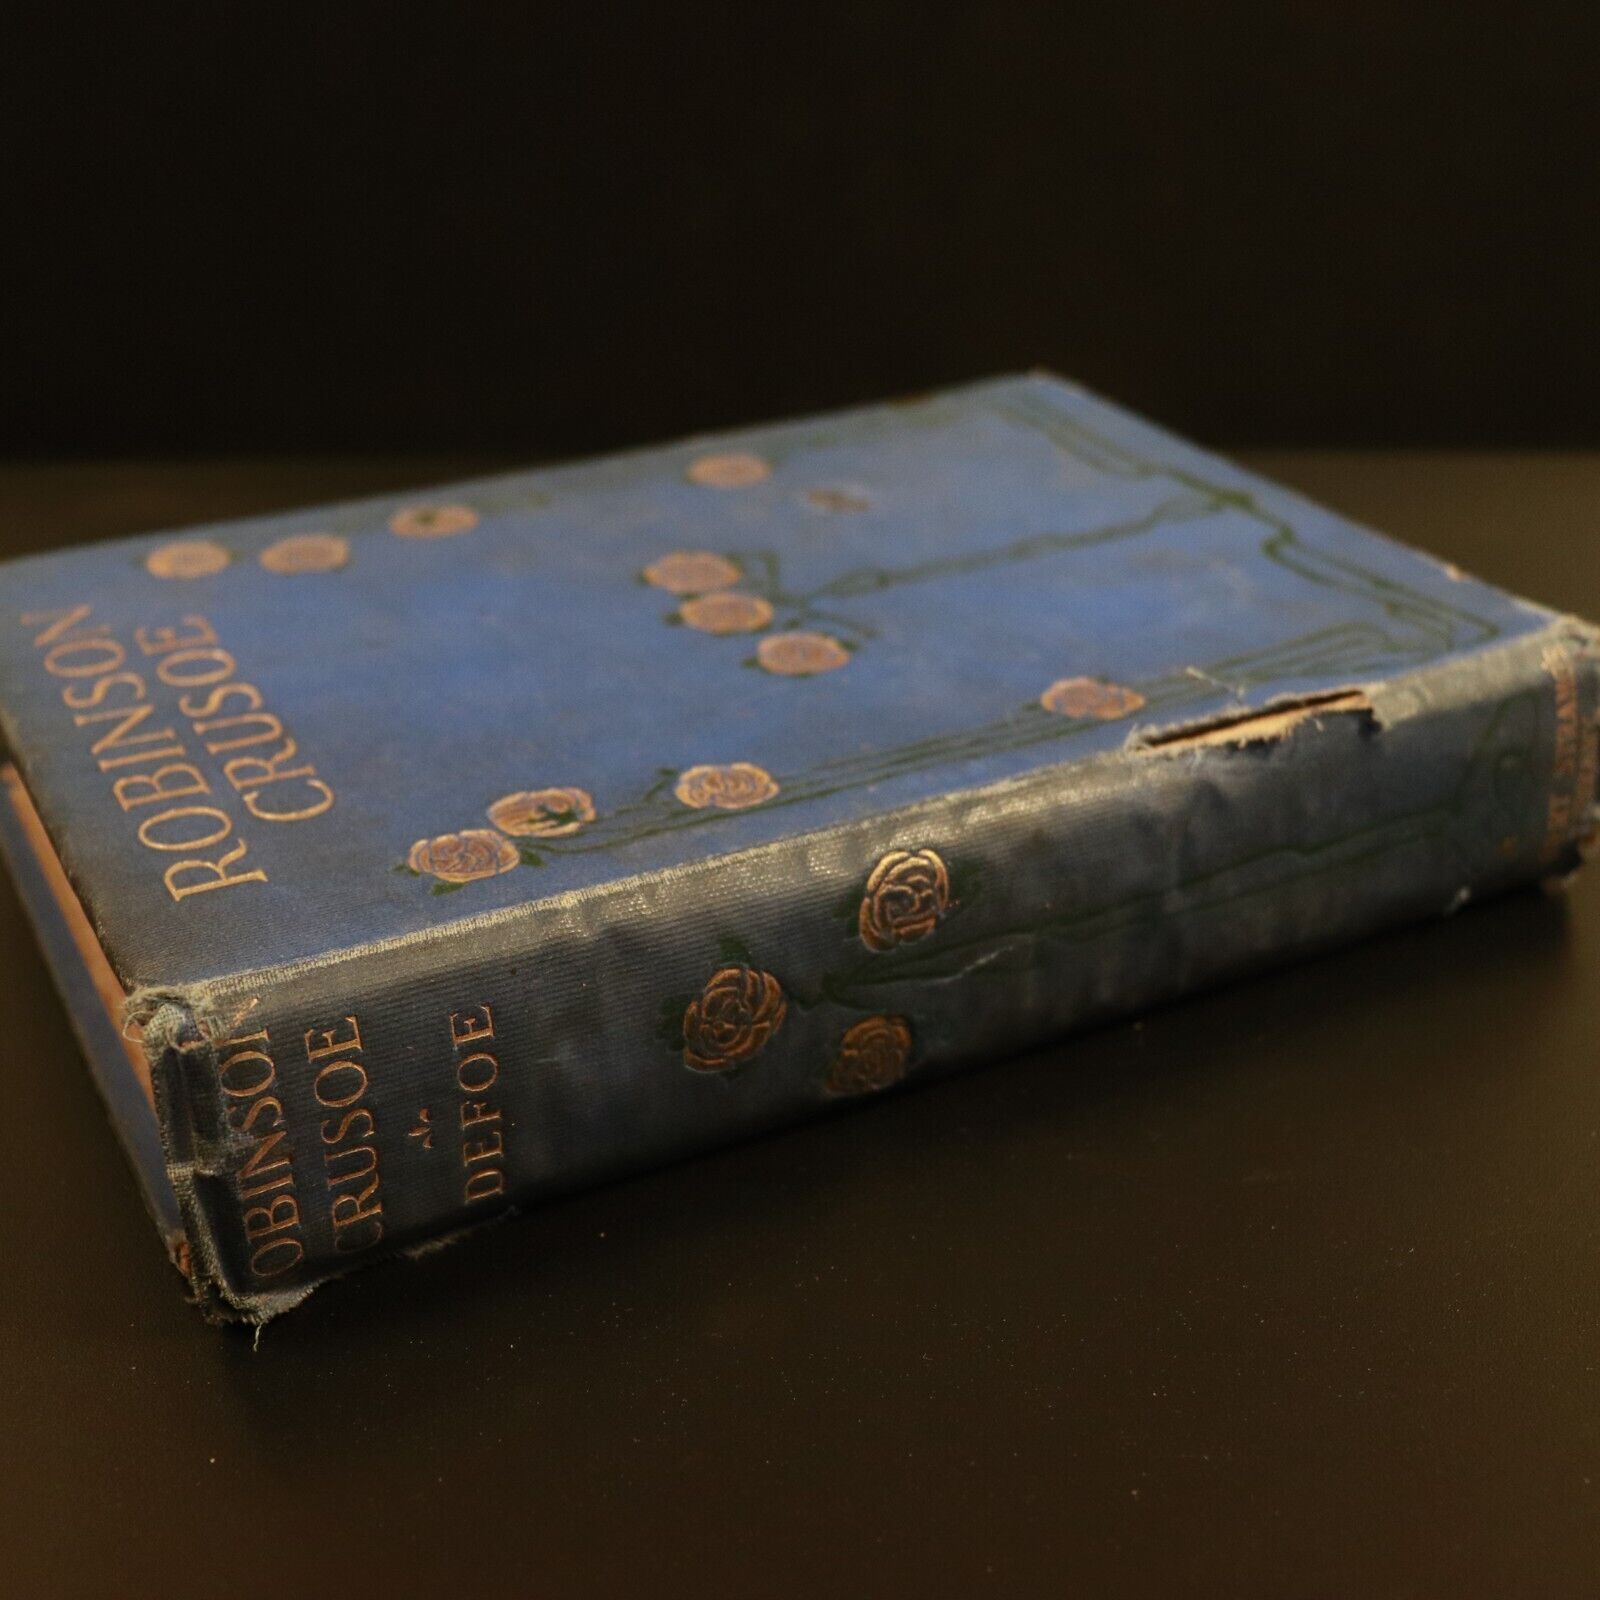 c1910 Robinson Crusoe by Daniel Defoe Antique Classic Fiction Book